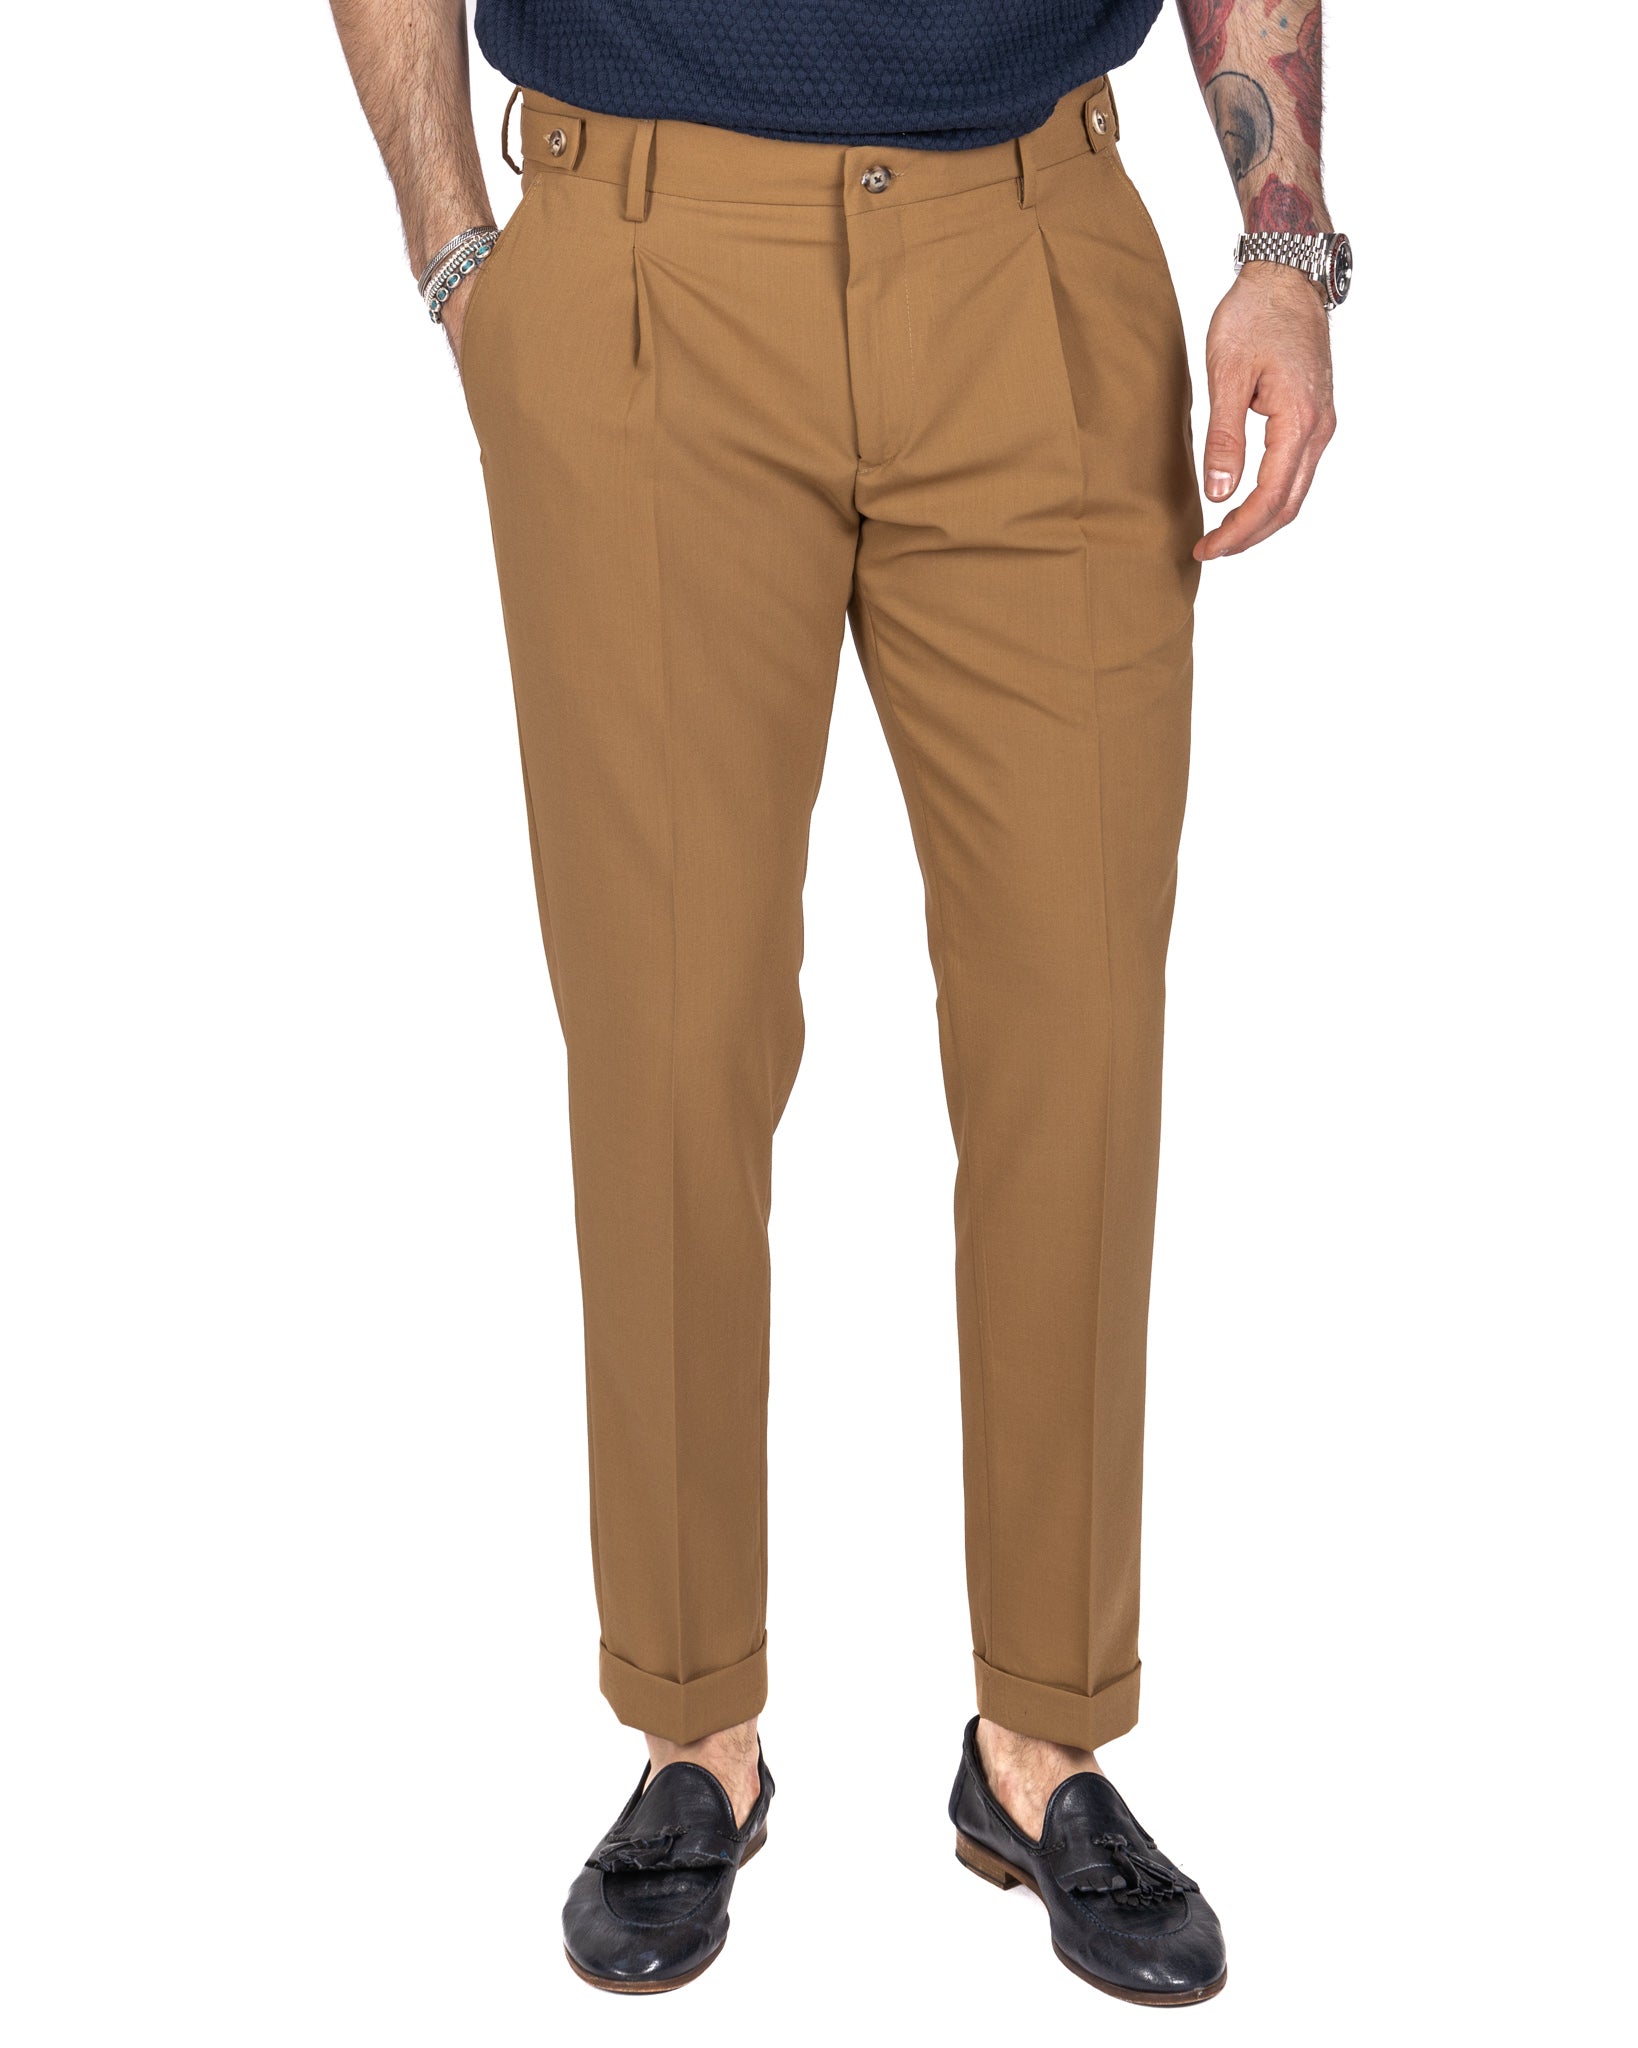 Milan - basic beige trousers